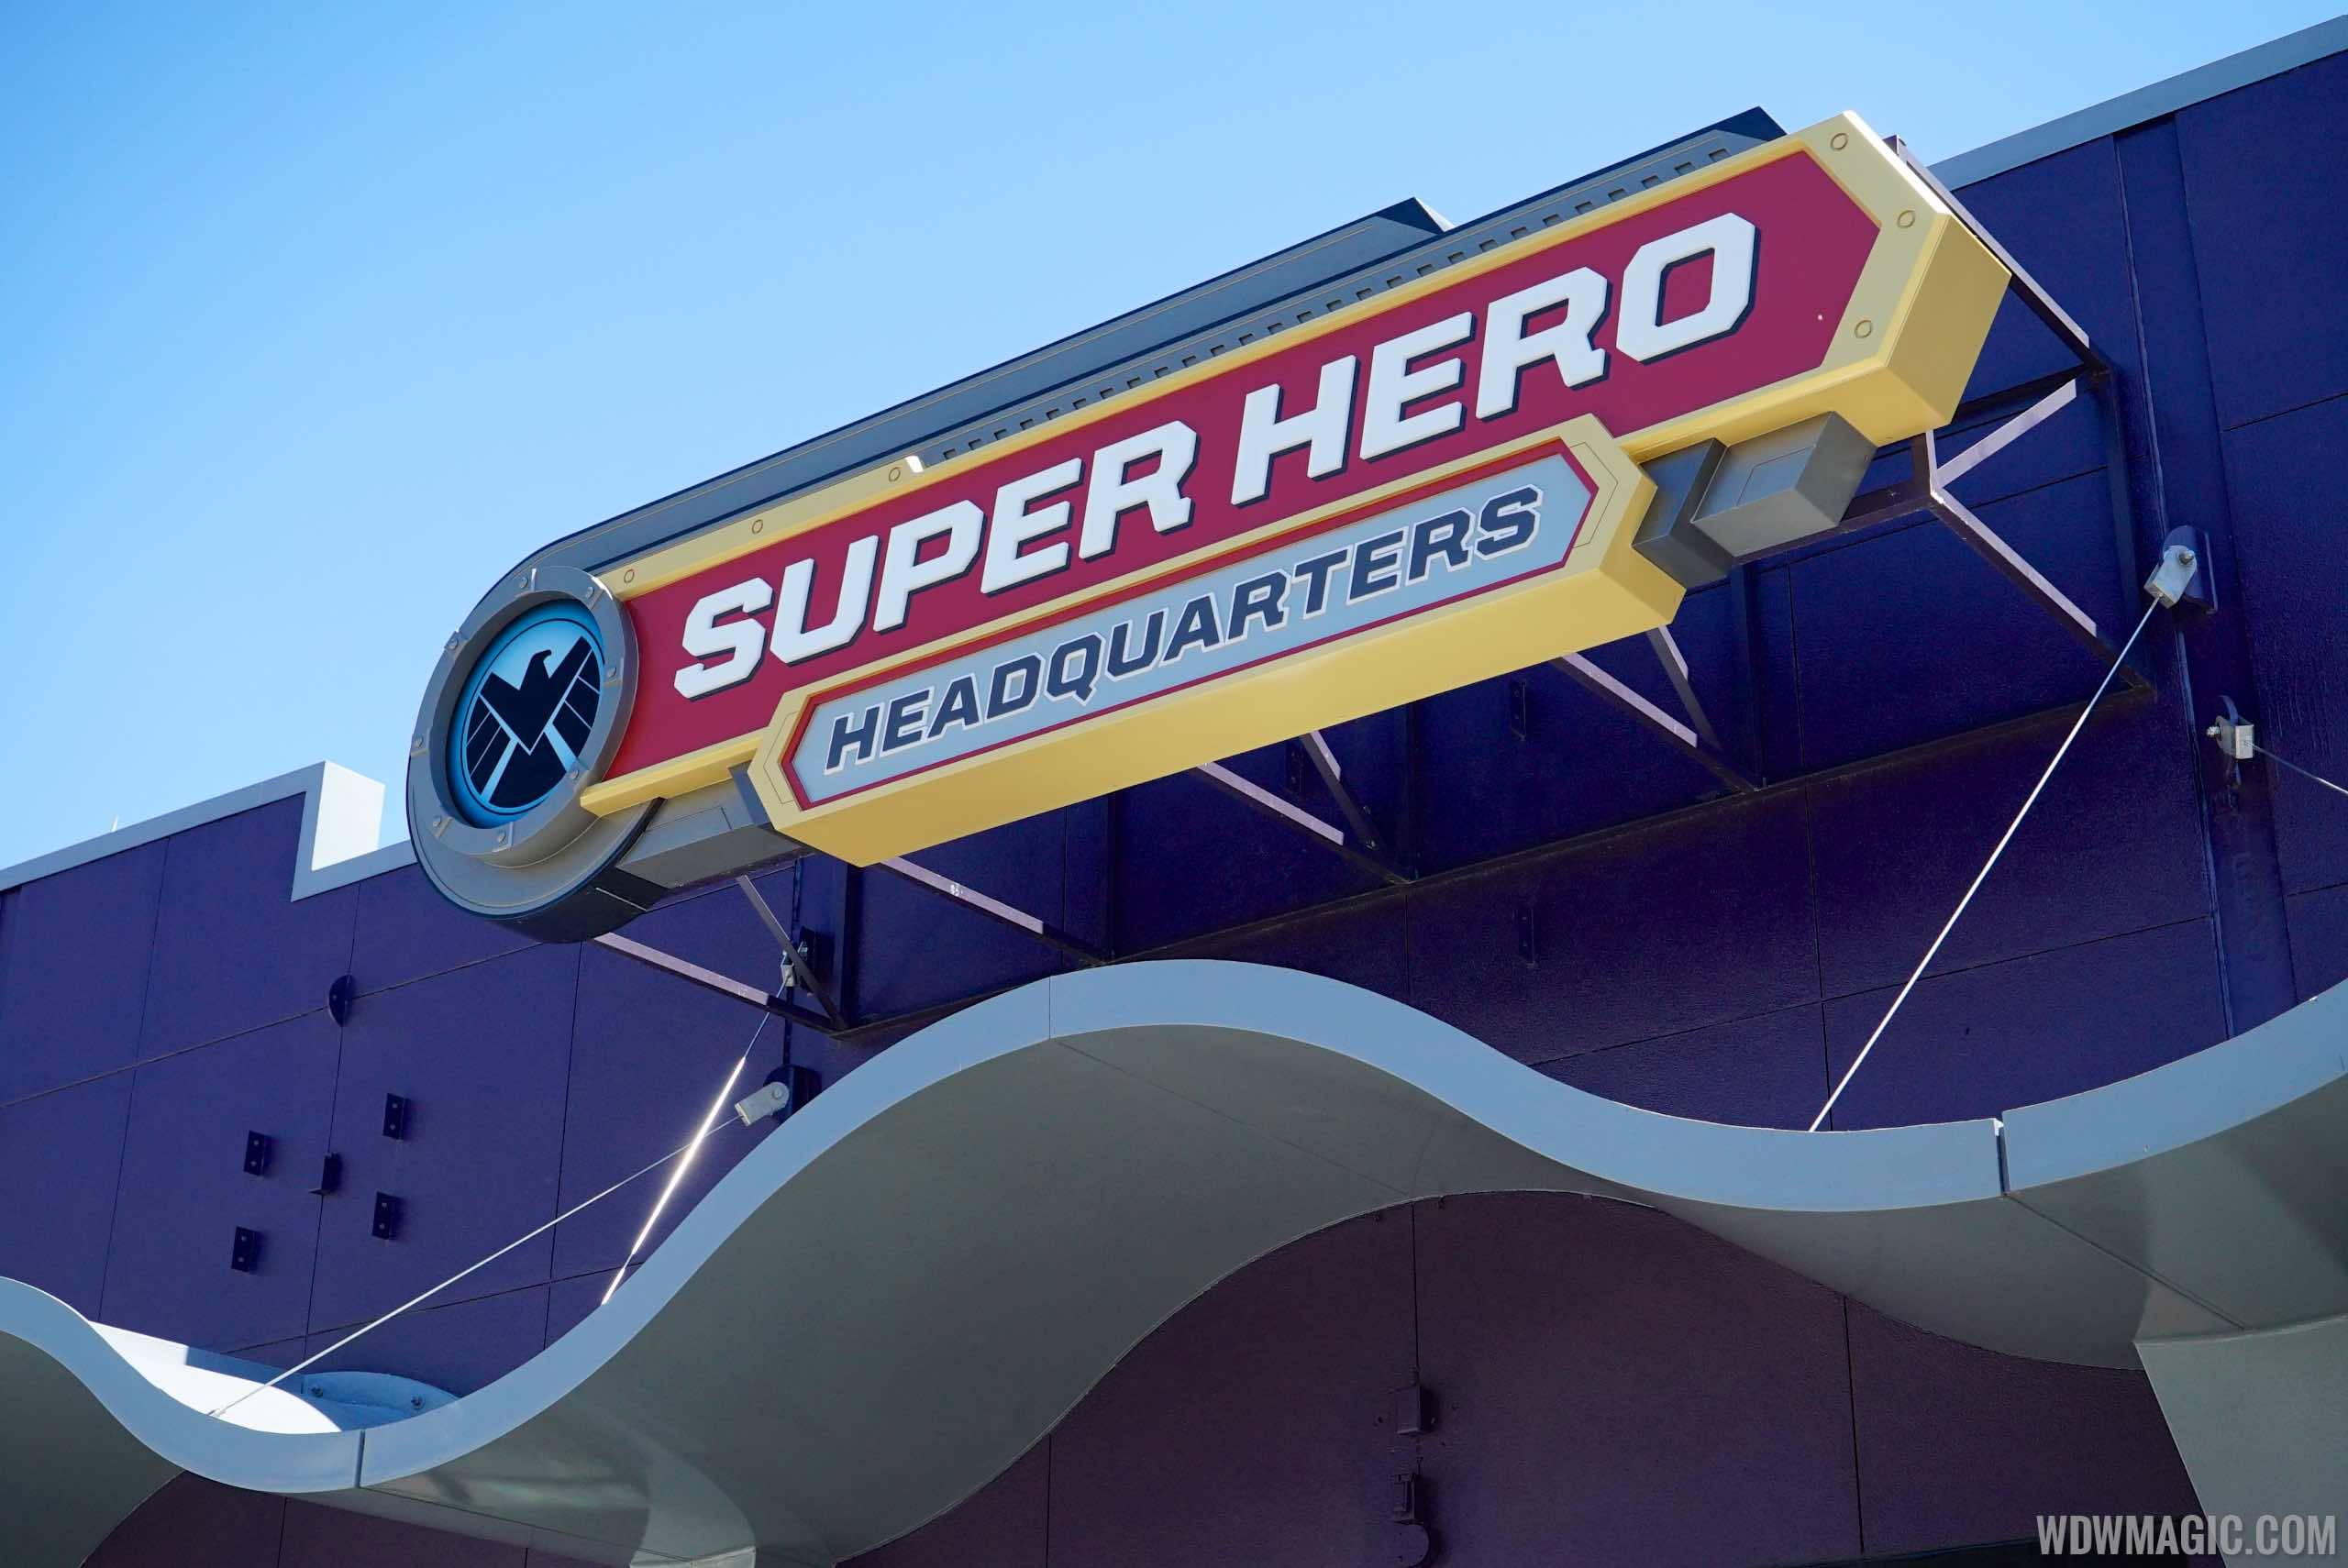 Super Hero Headquarters overview